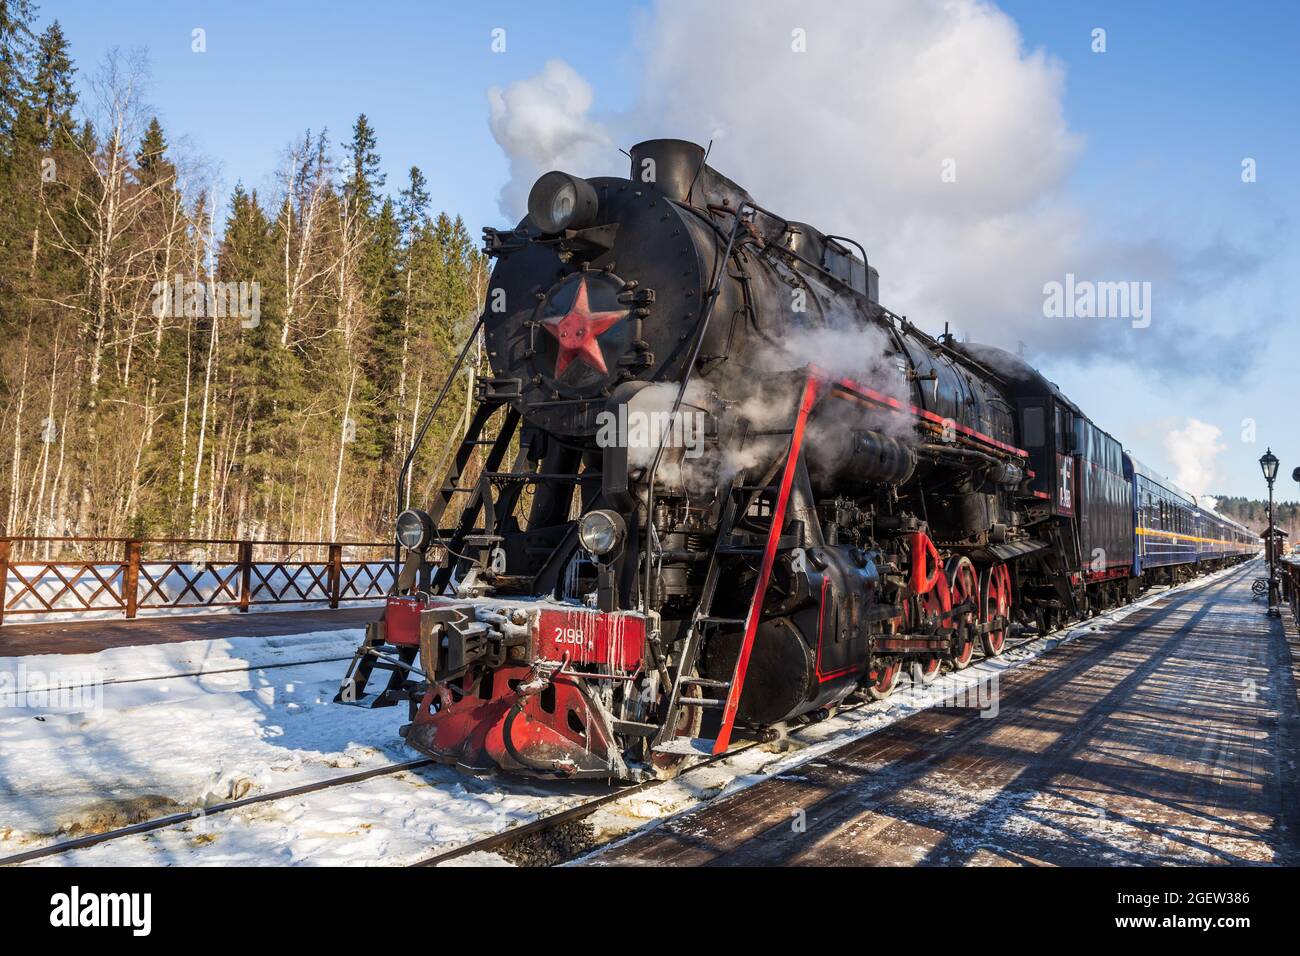 RUSKEALA, RUSSLAND - 10. MÄRZ 2021: Touristischer Retrozug Ruskeala Express mit Dampflokomotive fährt vom Bahnhof Ruskeala ab Stockfoto